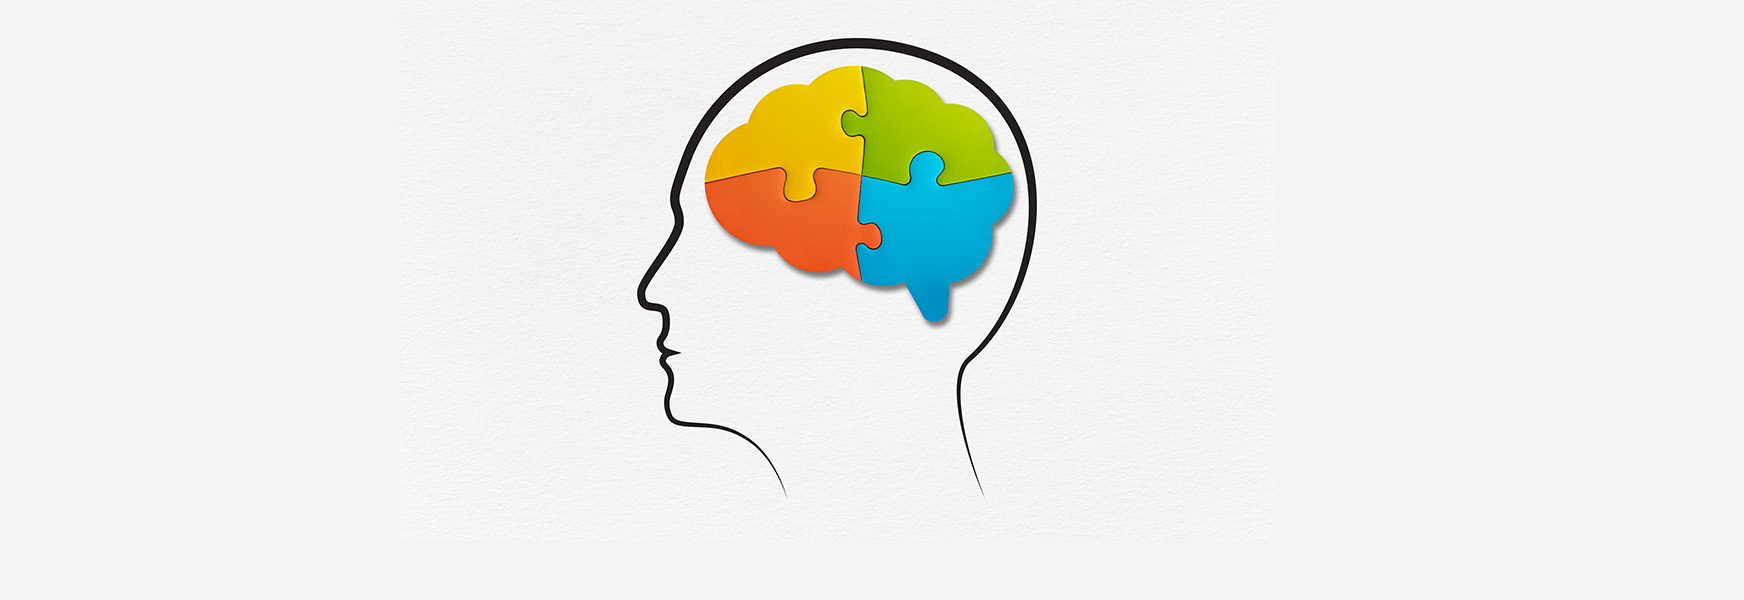 Brain puzzle pieces illustration